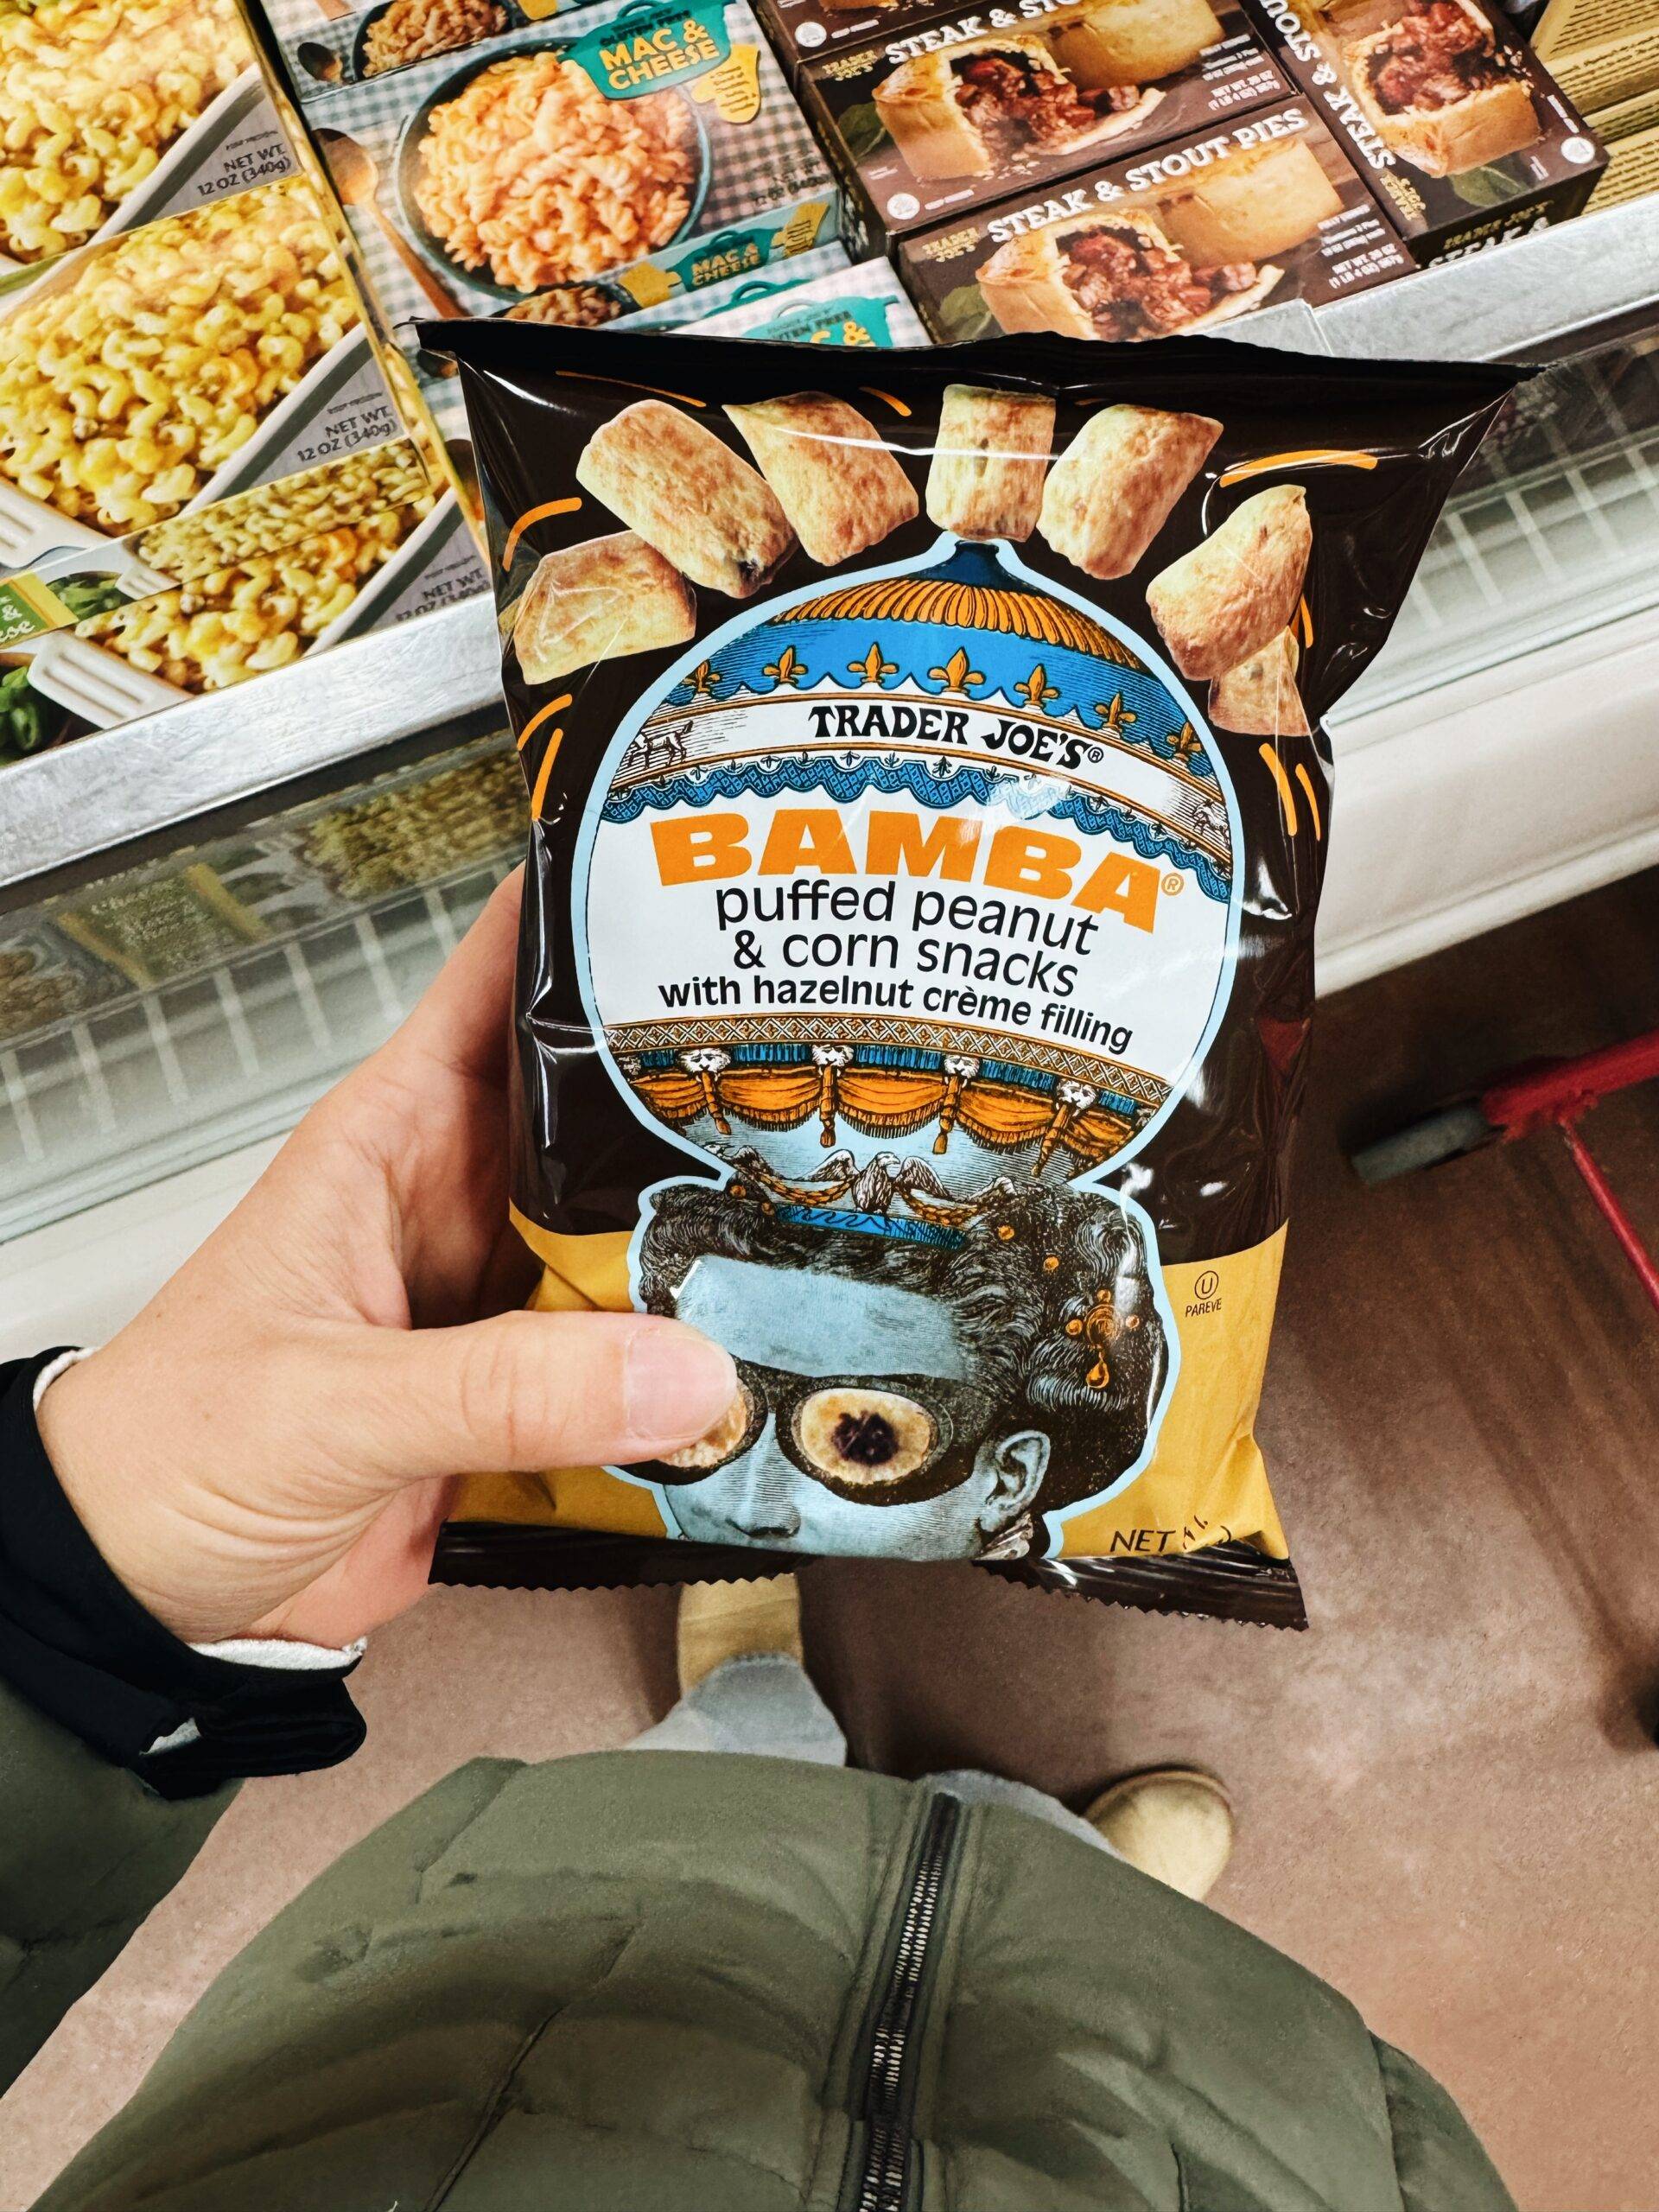 Bag of bamba hazelnut snacks.